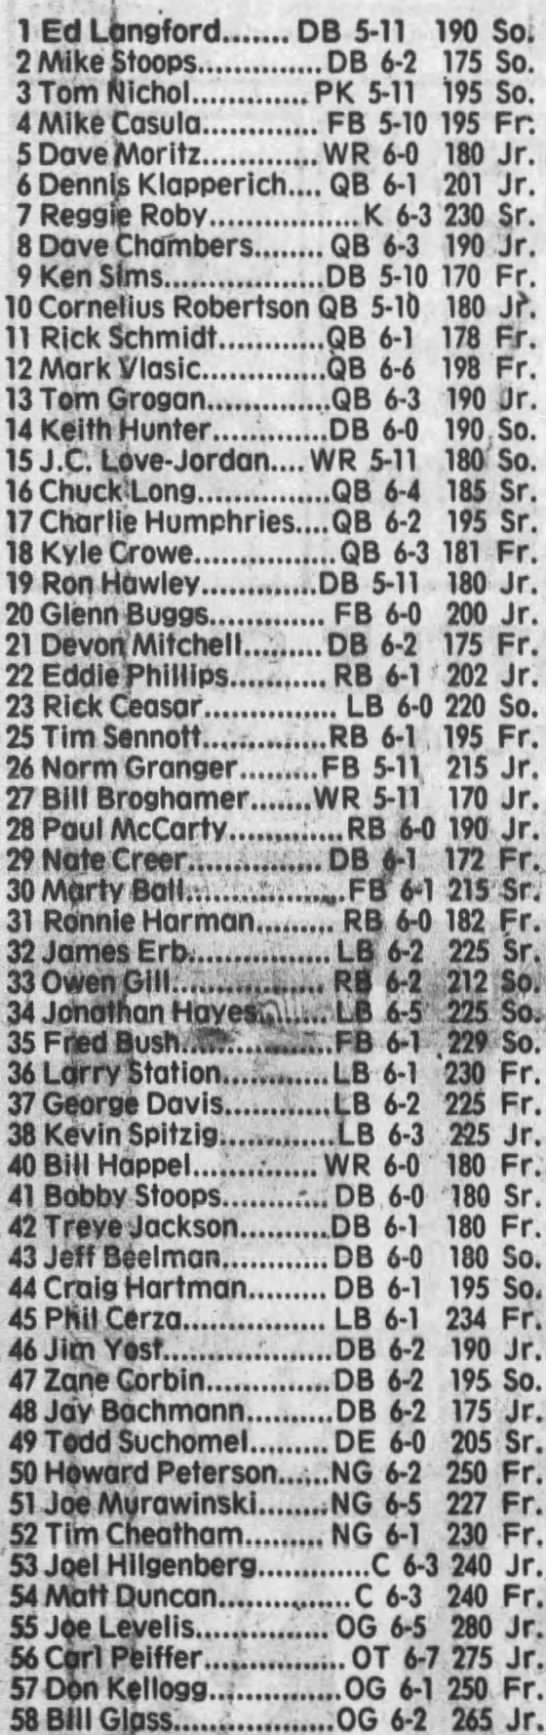 1982 Iowa football roster 1 - 